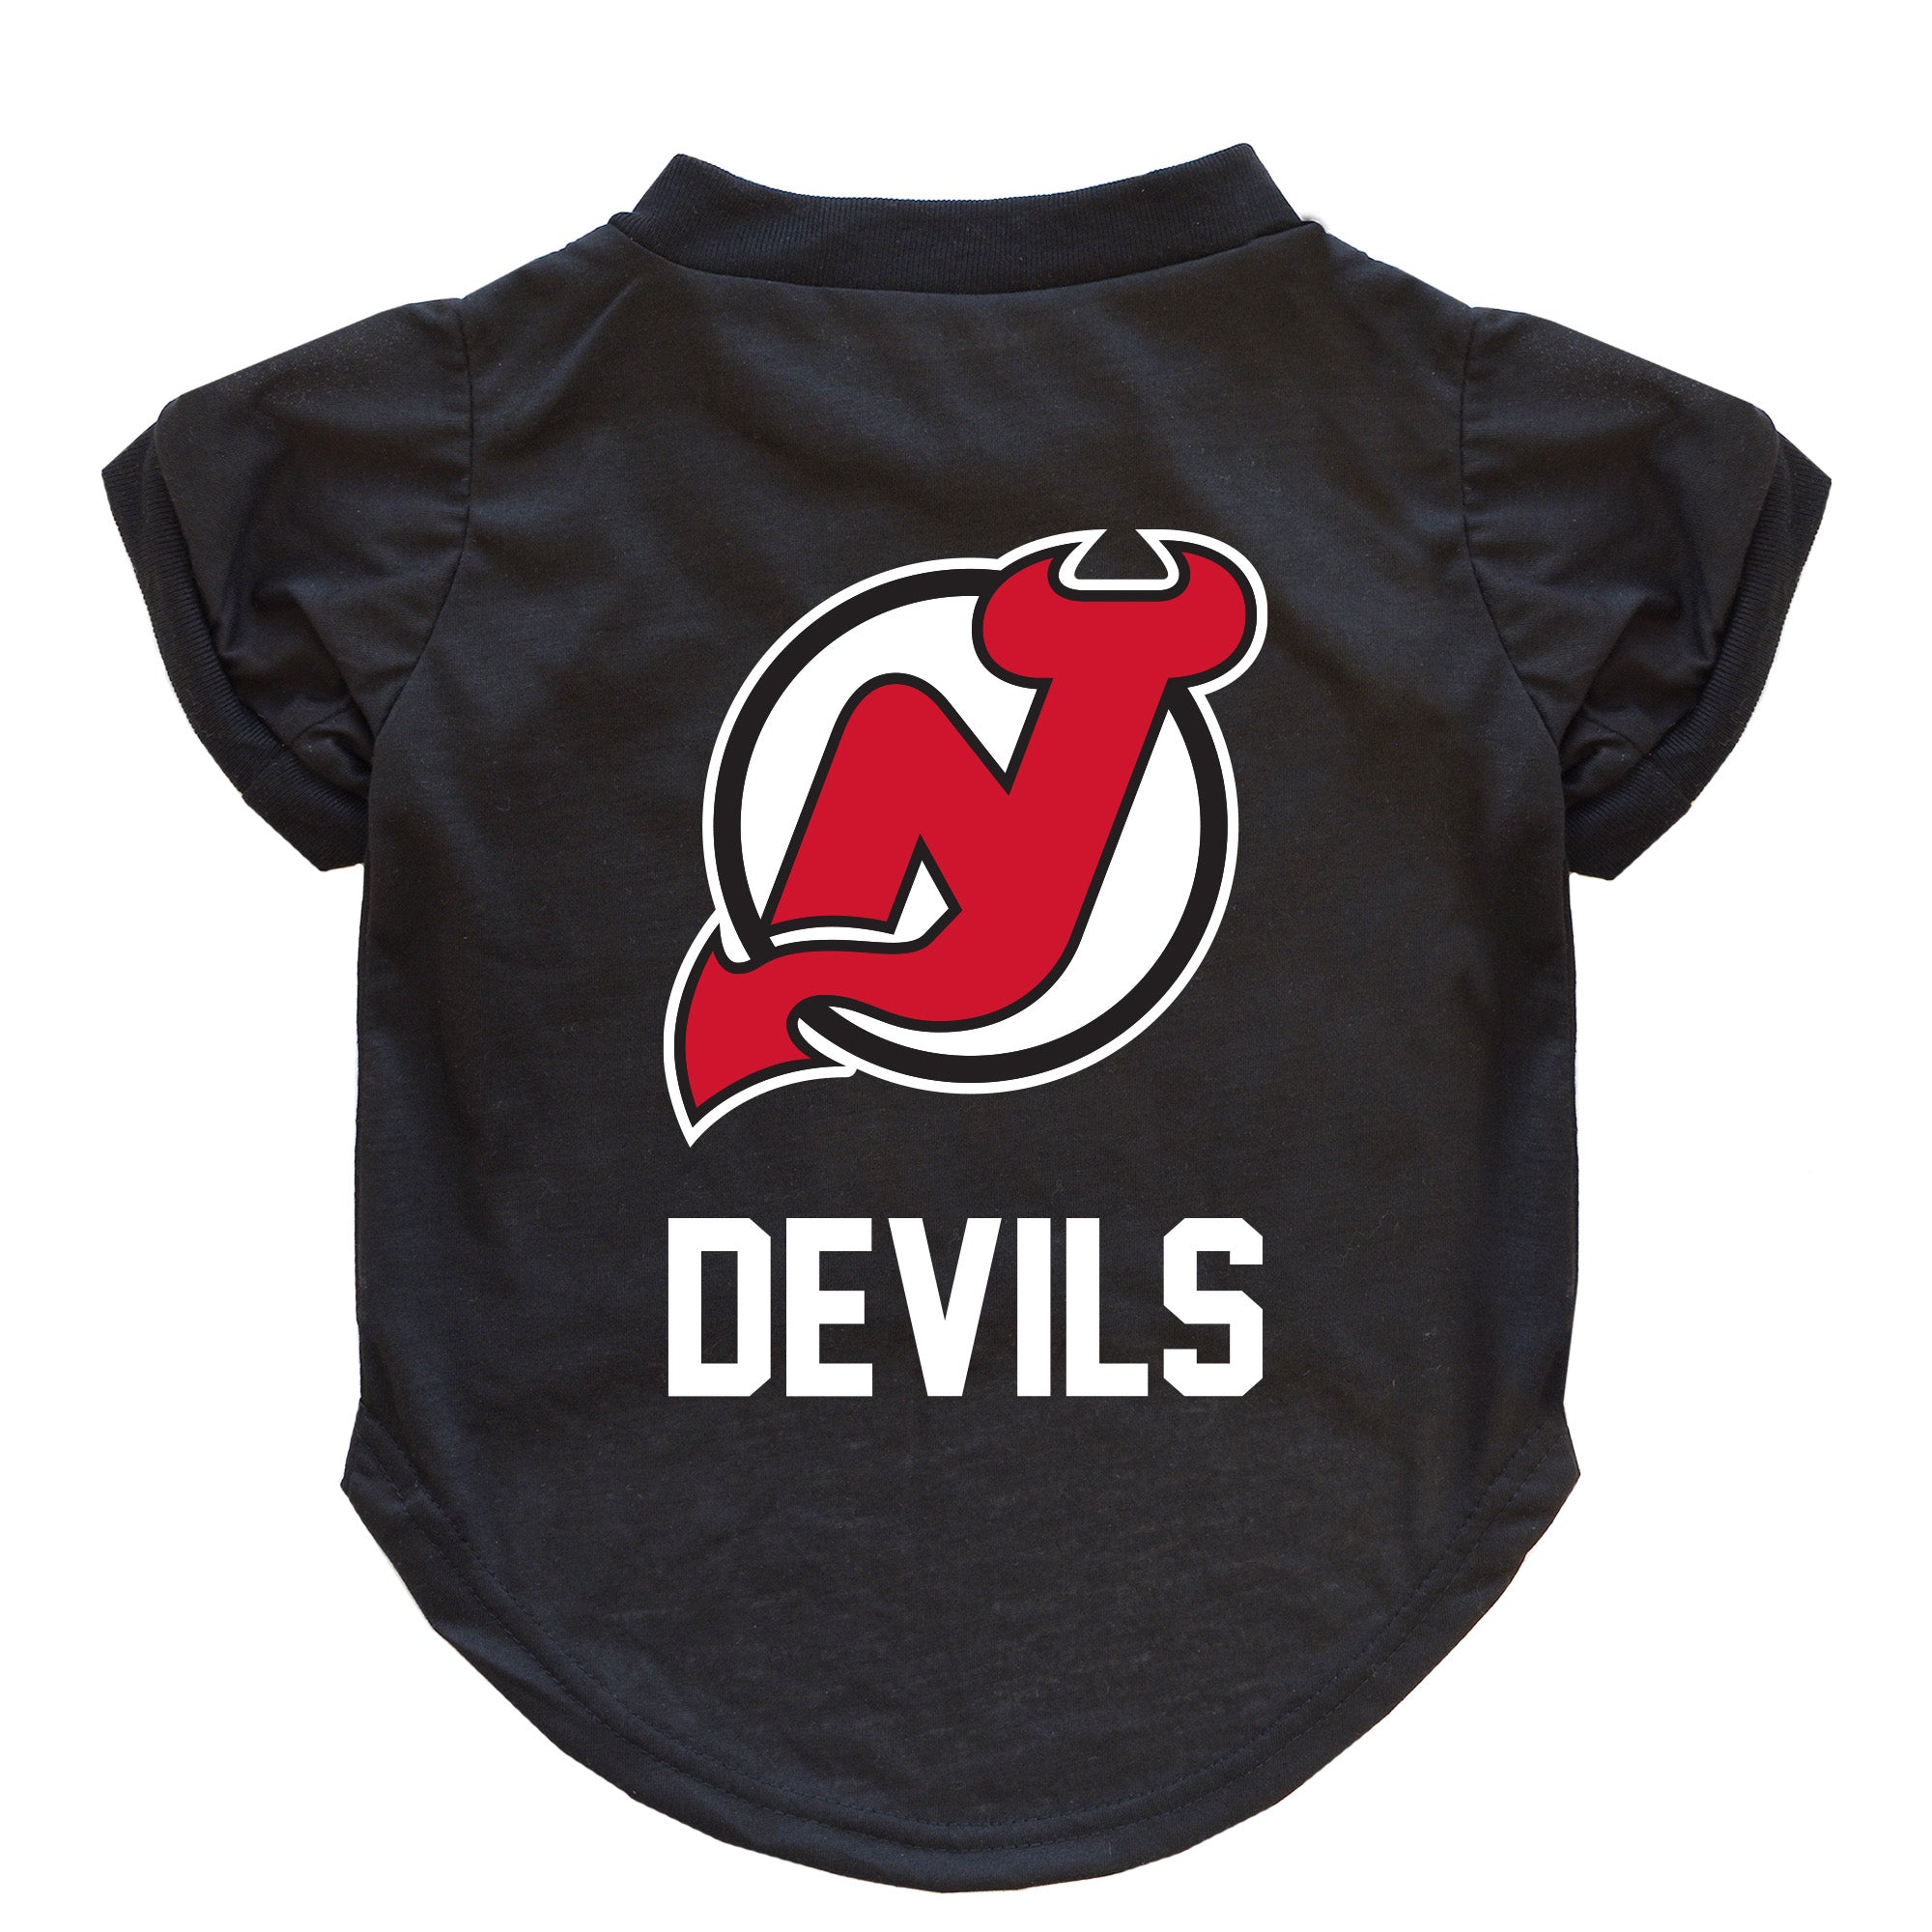 New Jersey Devils NHL Dog Collar